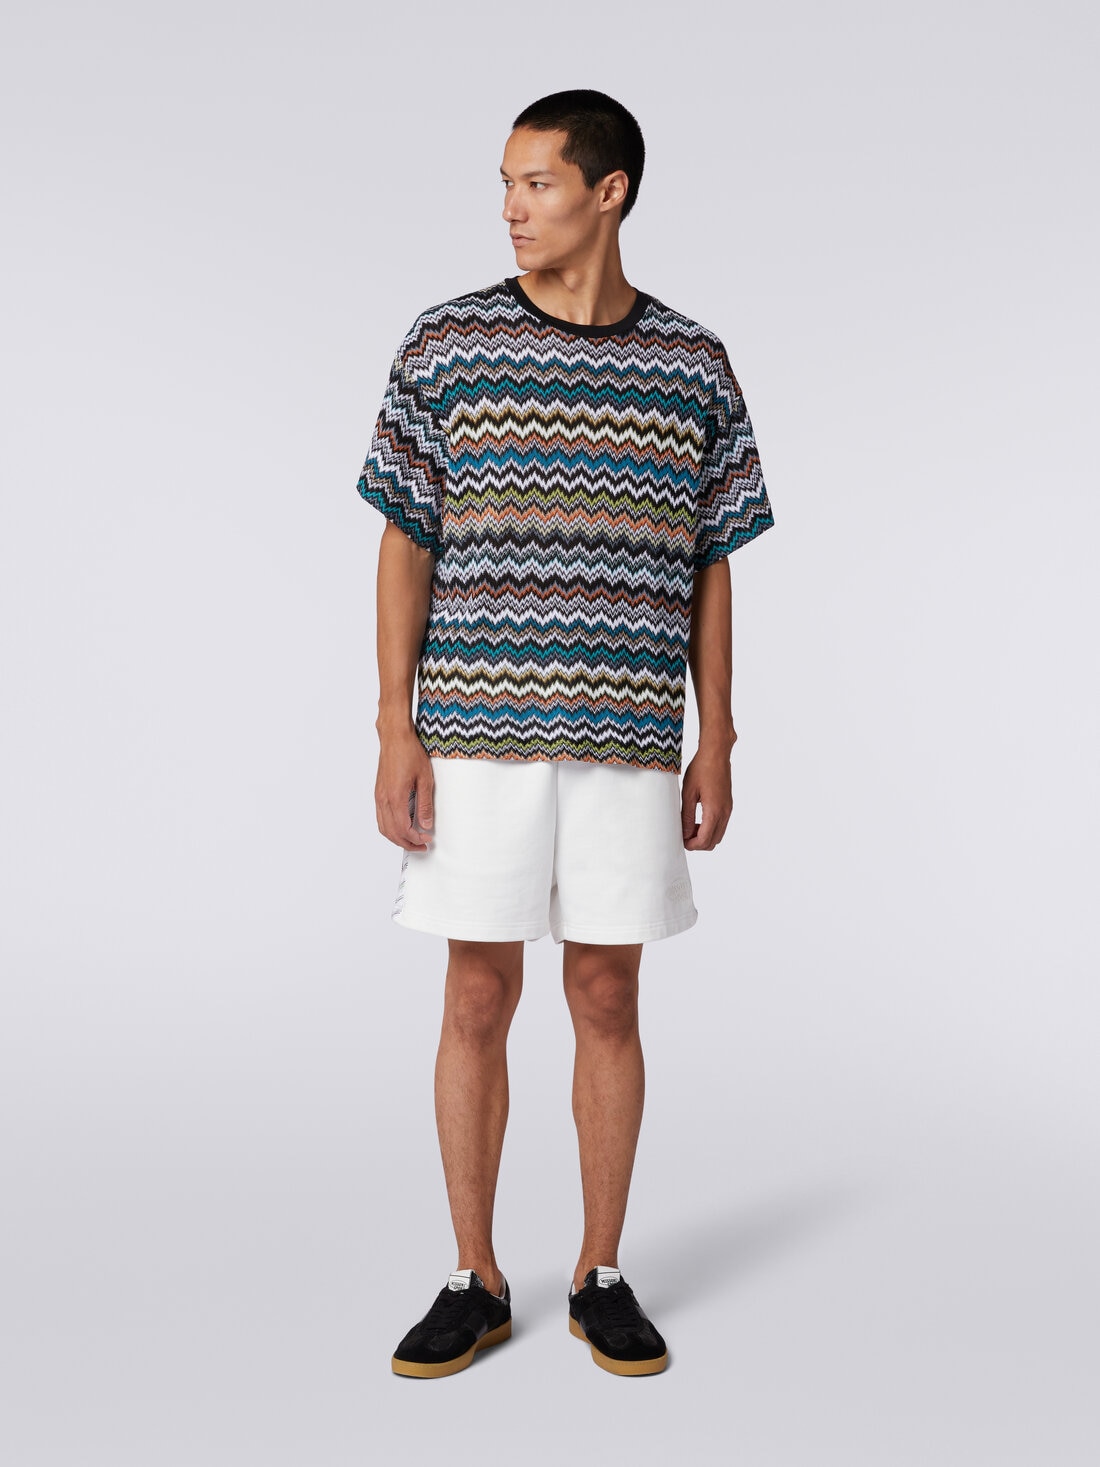 Crew-neck T-shirt in zigzag cotton knit, Multicoloured  - TS24SL03BR00UUSM9AX - 1